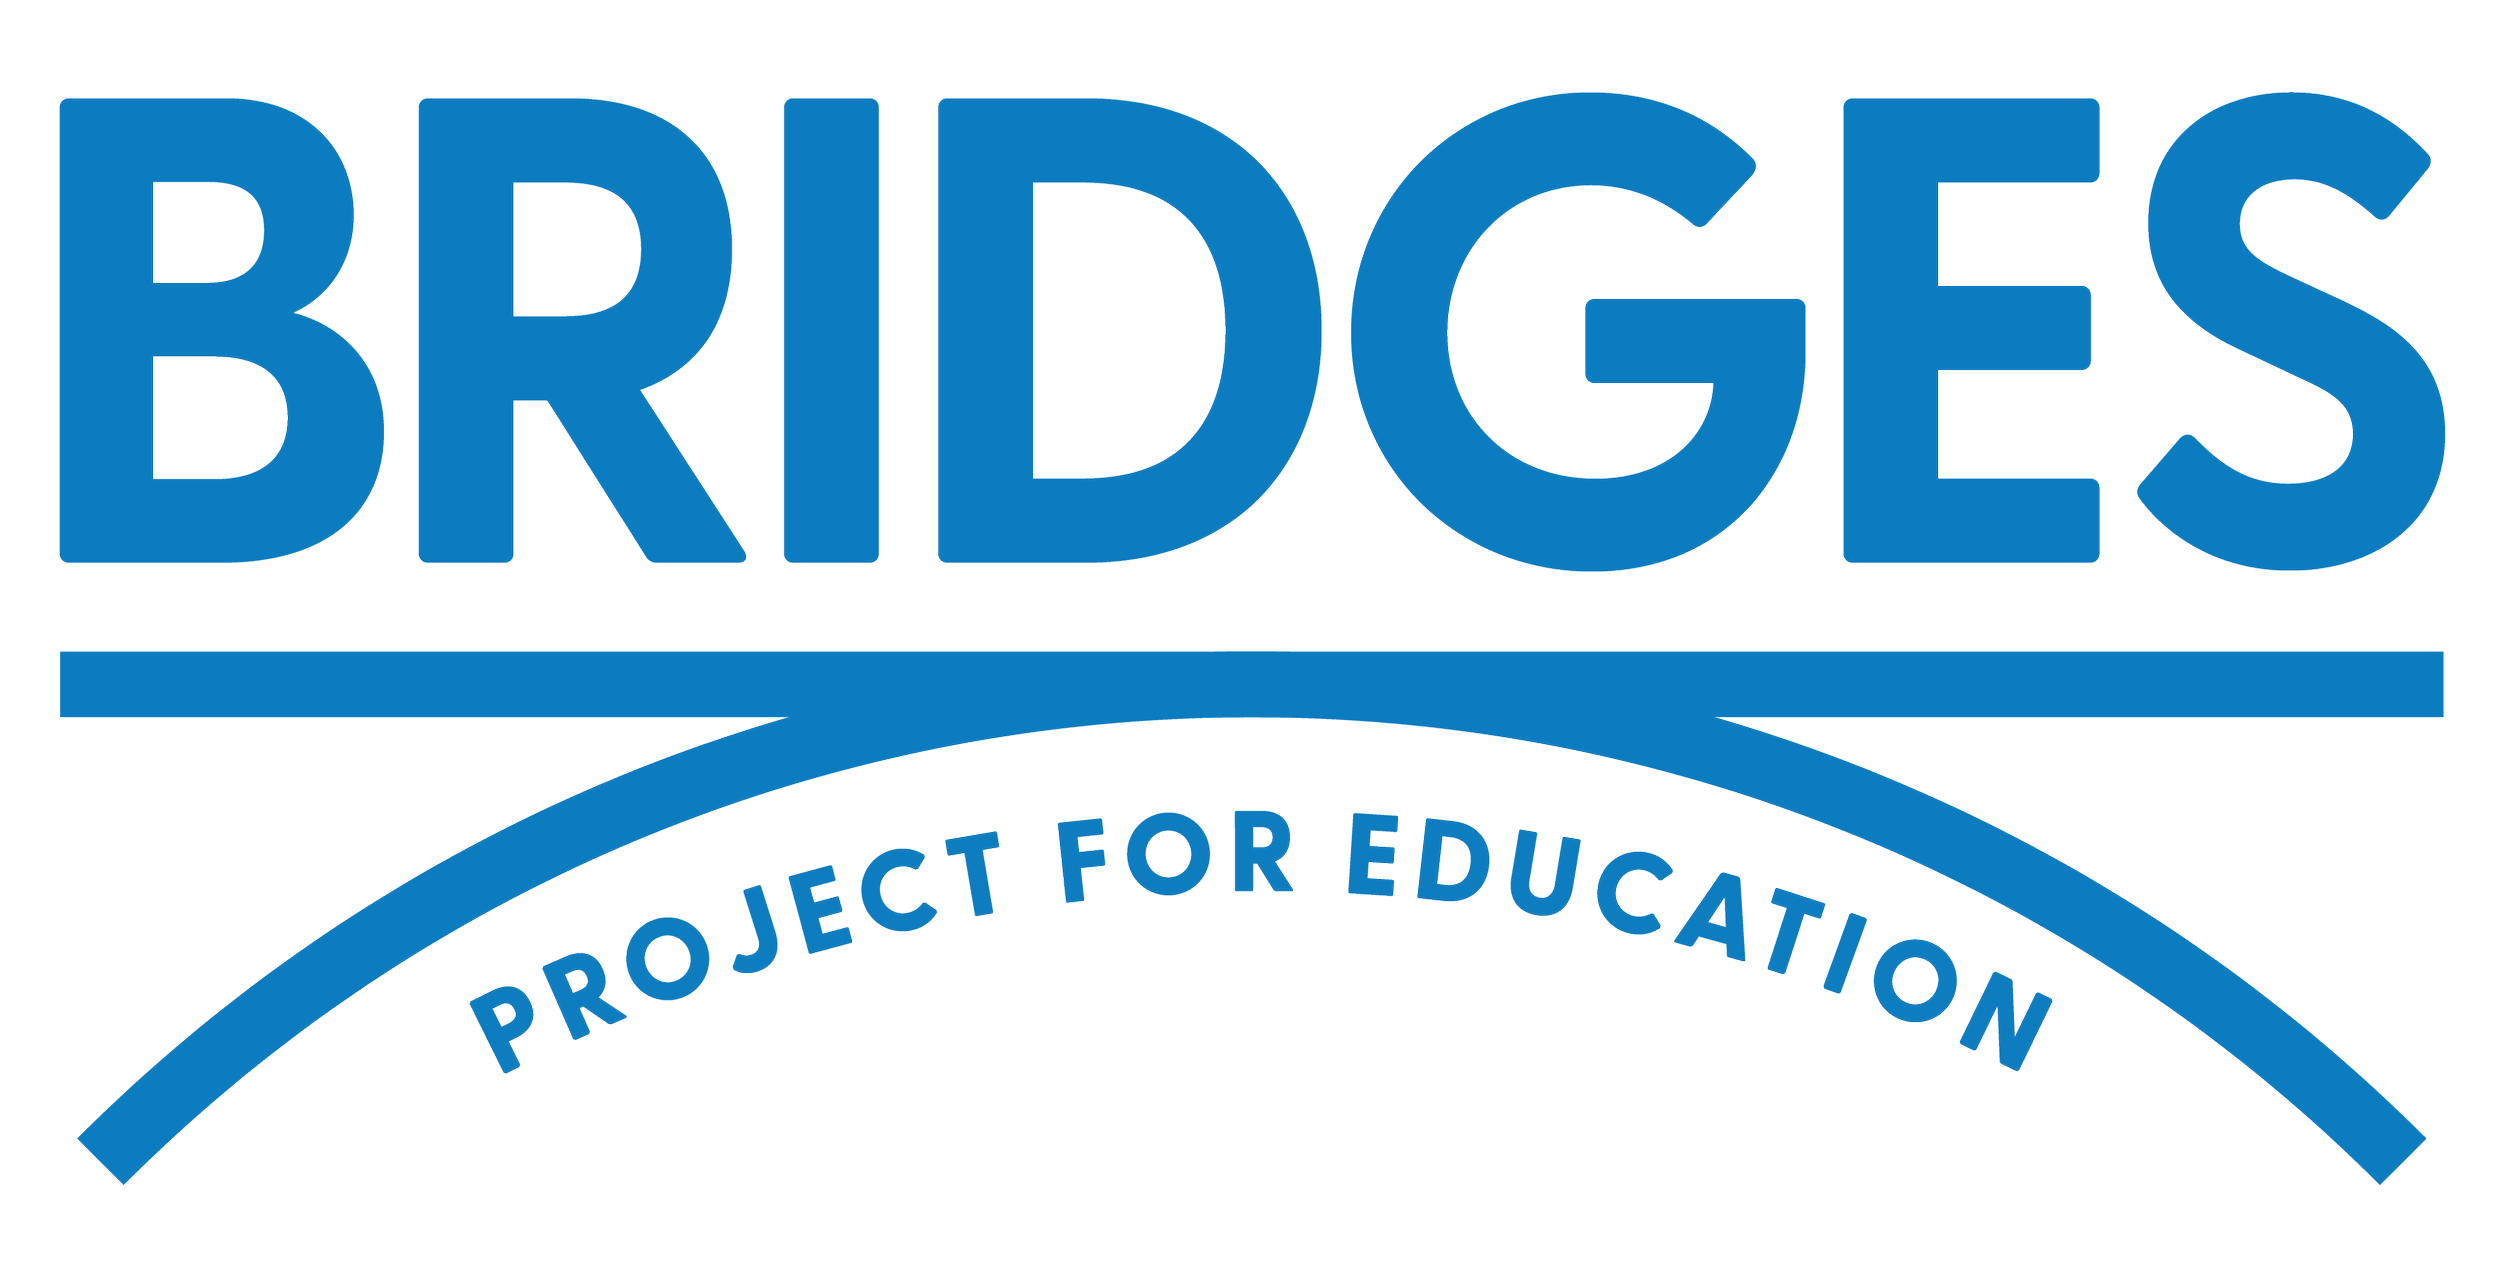 Bridges Project for Education New Logo